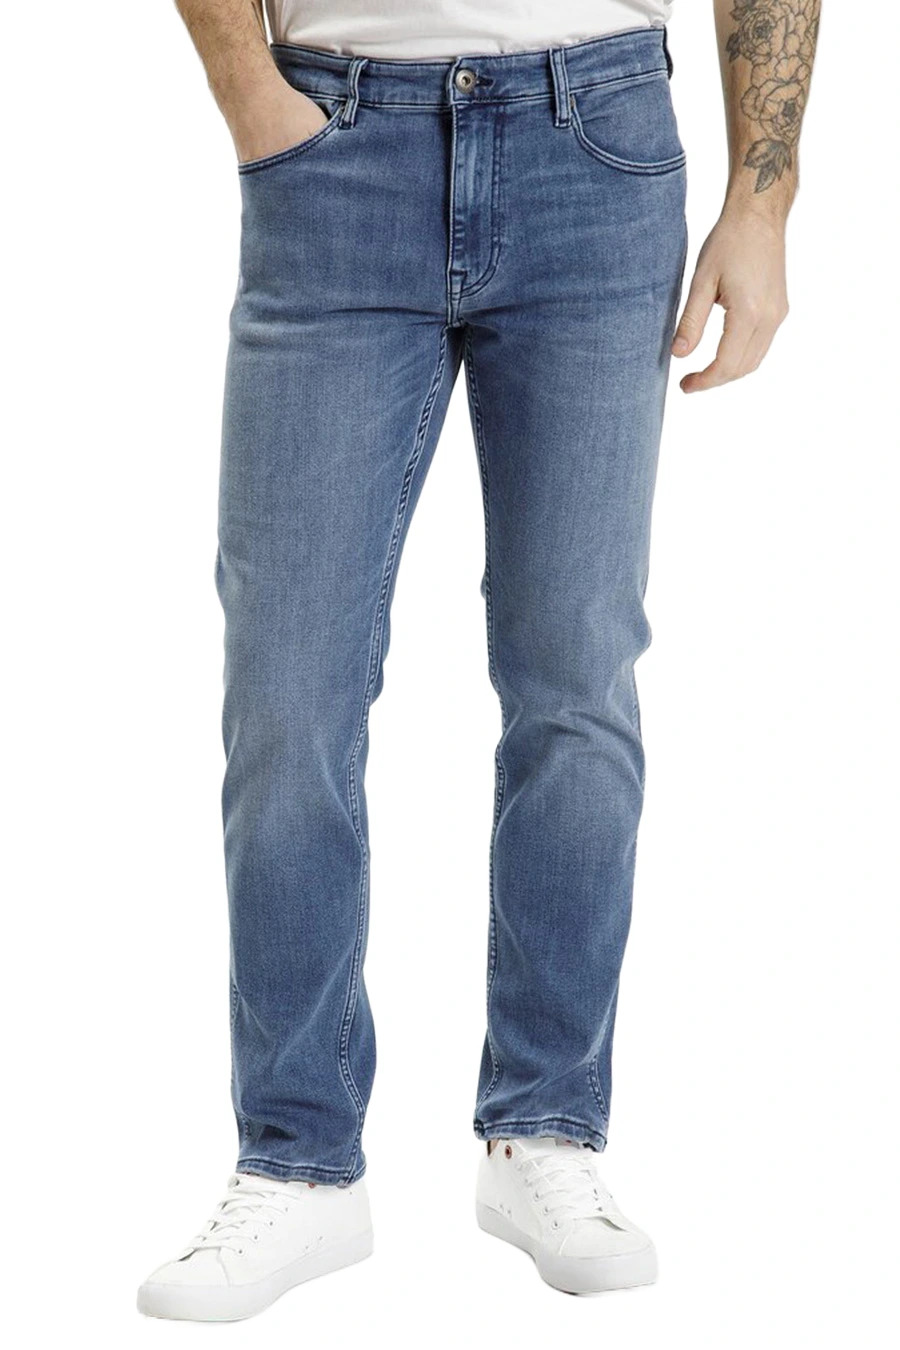 Jeans CROSS JEANS C132-066